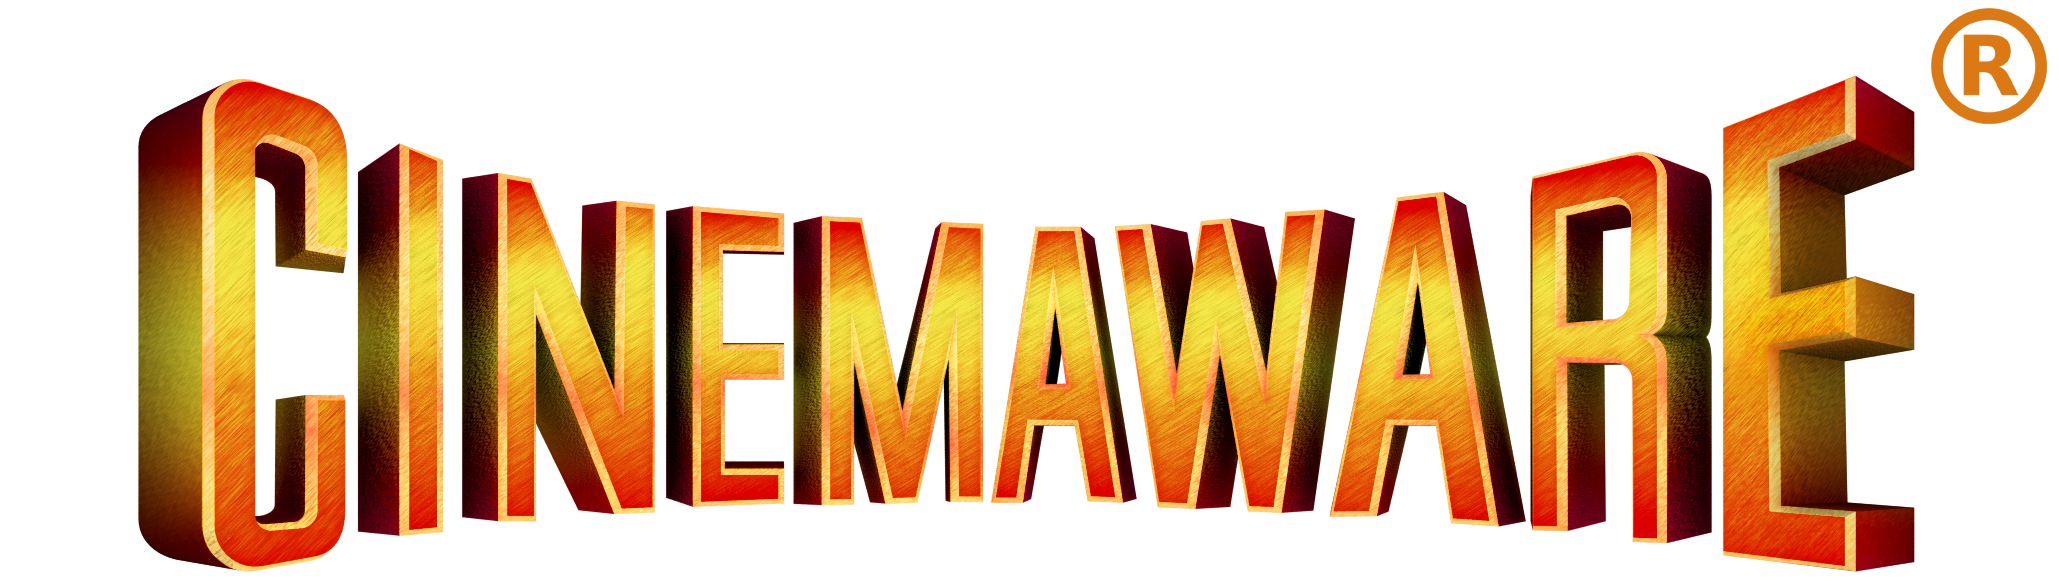 Cinemaware logo